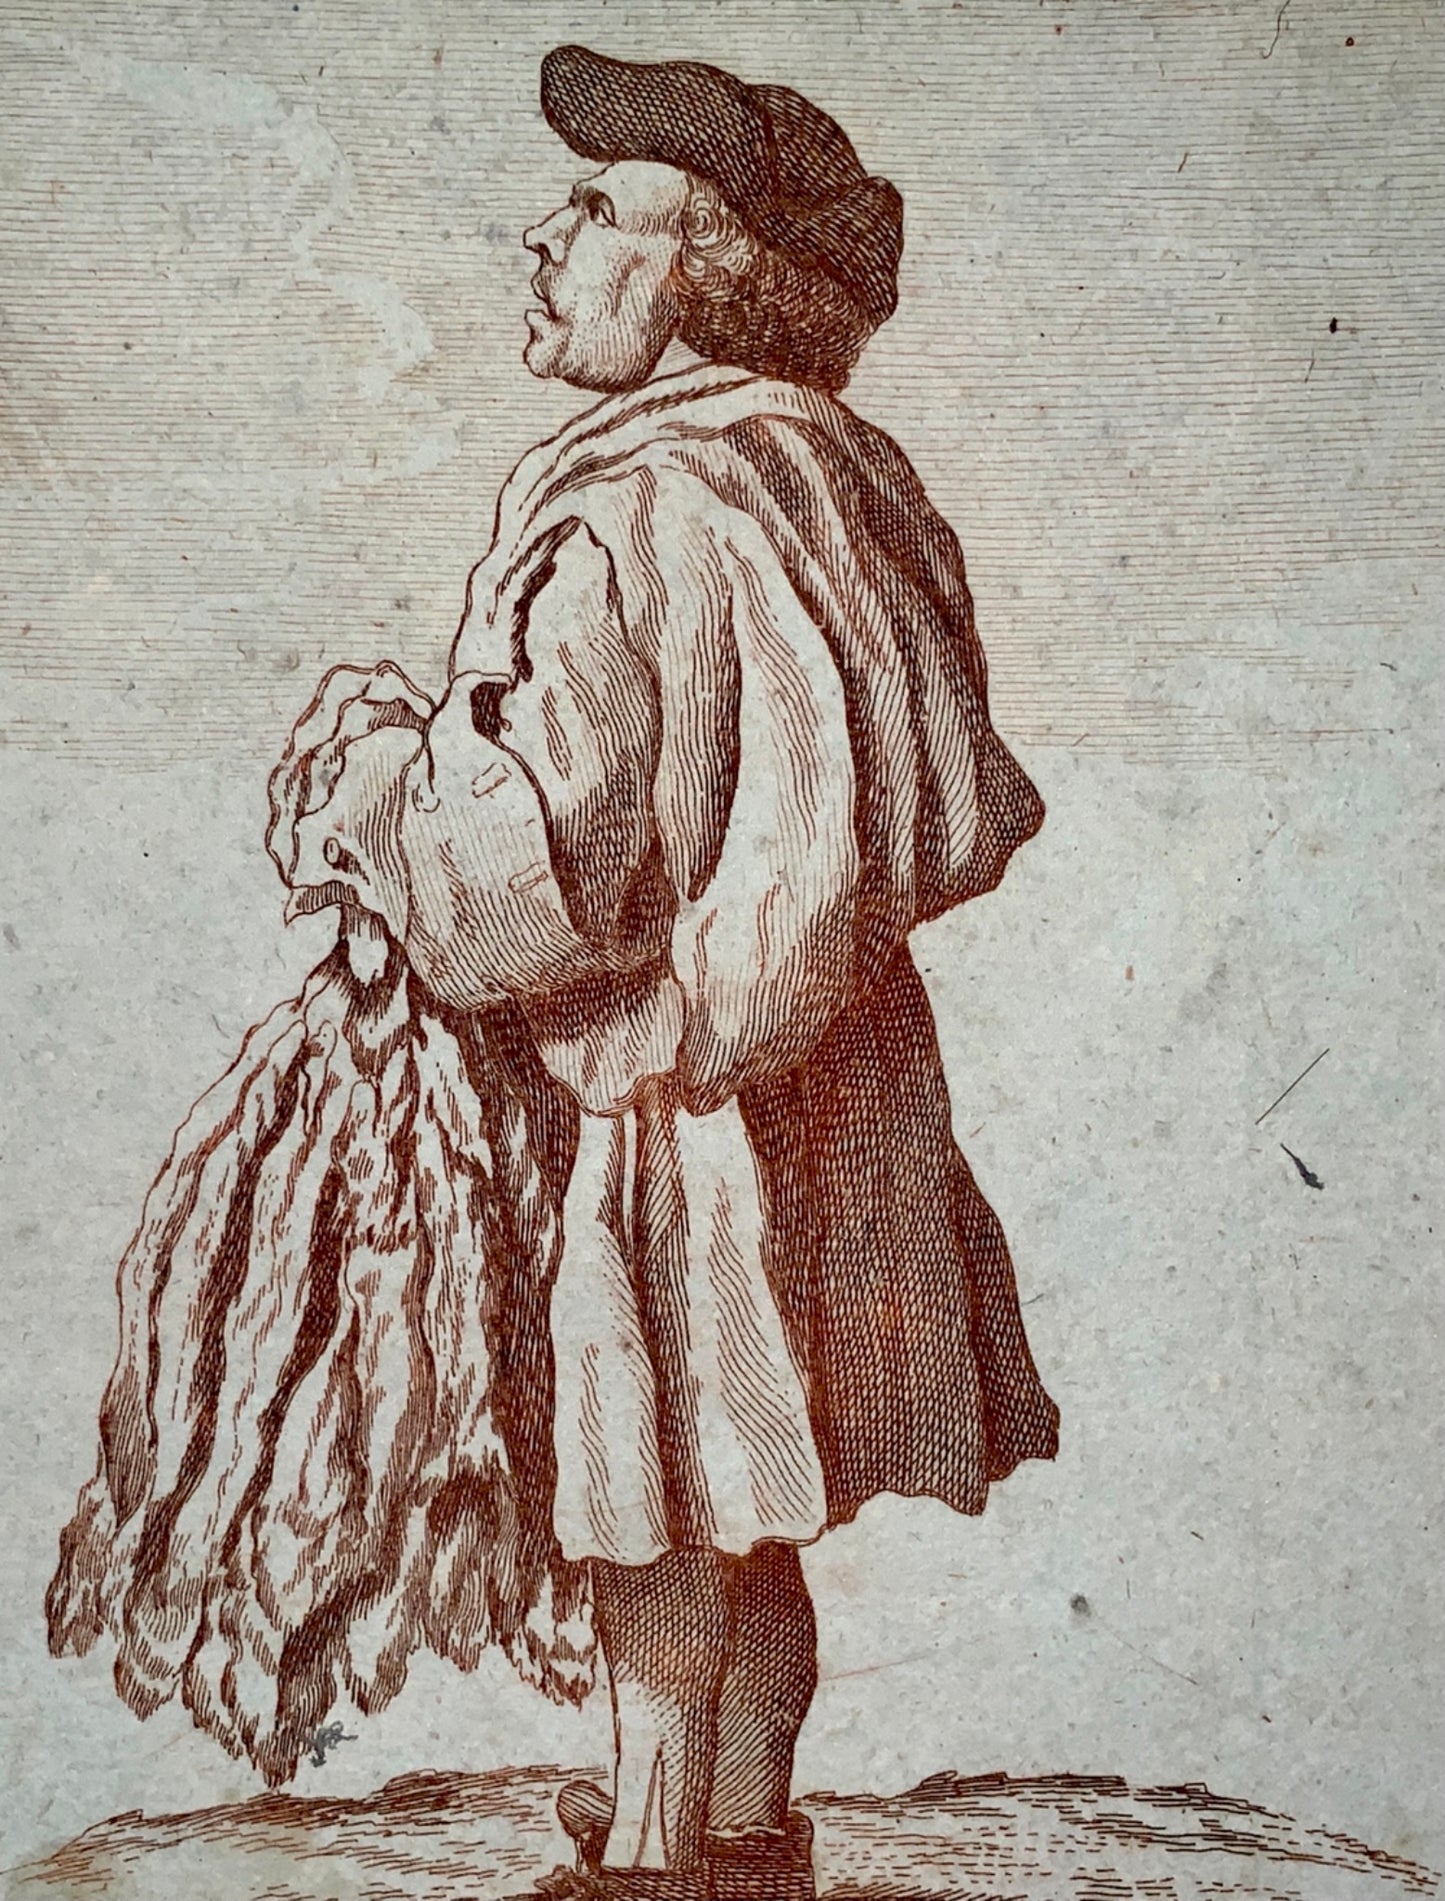 Ca 1760 scarce anonymous sepia engraving of a RABBIT SKIN SELLER - Trade